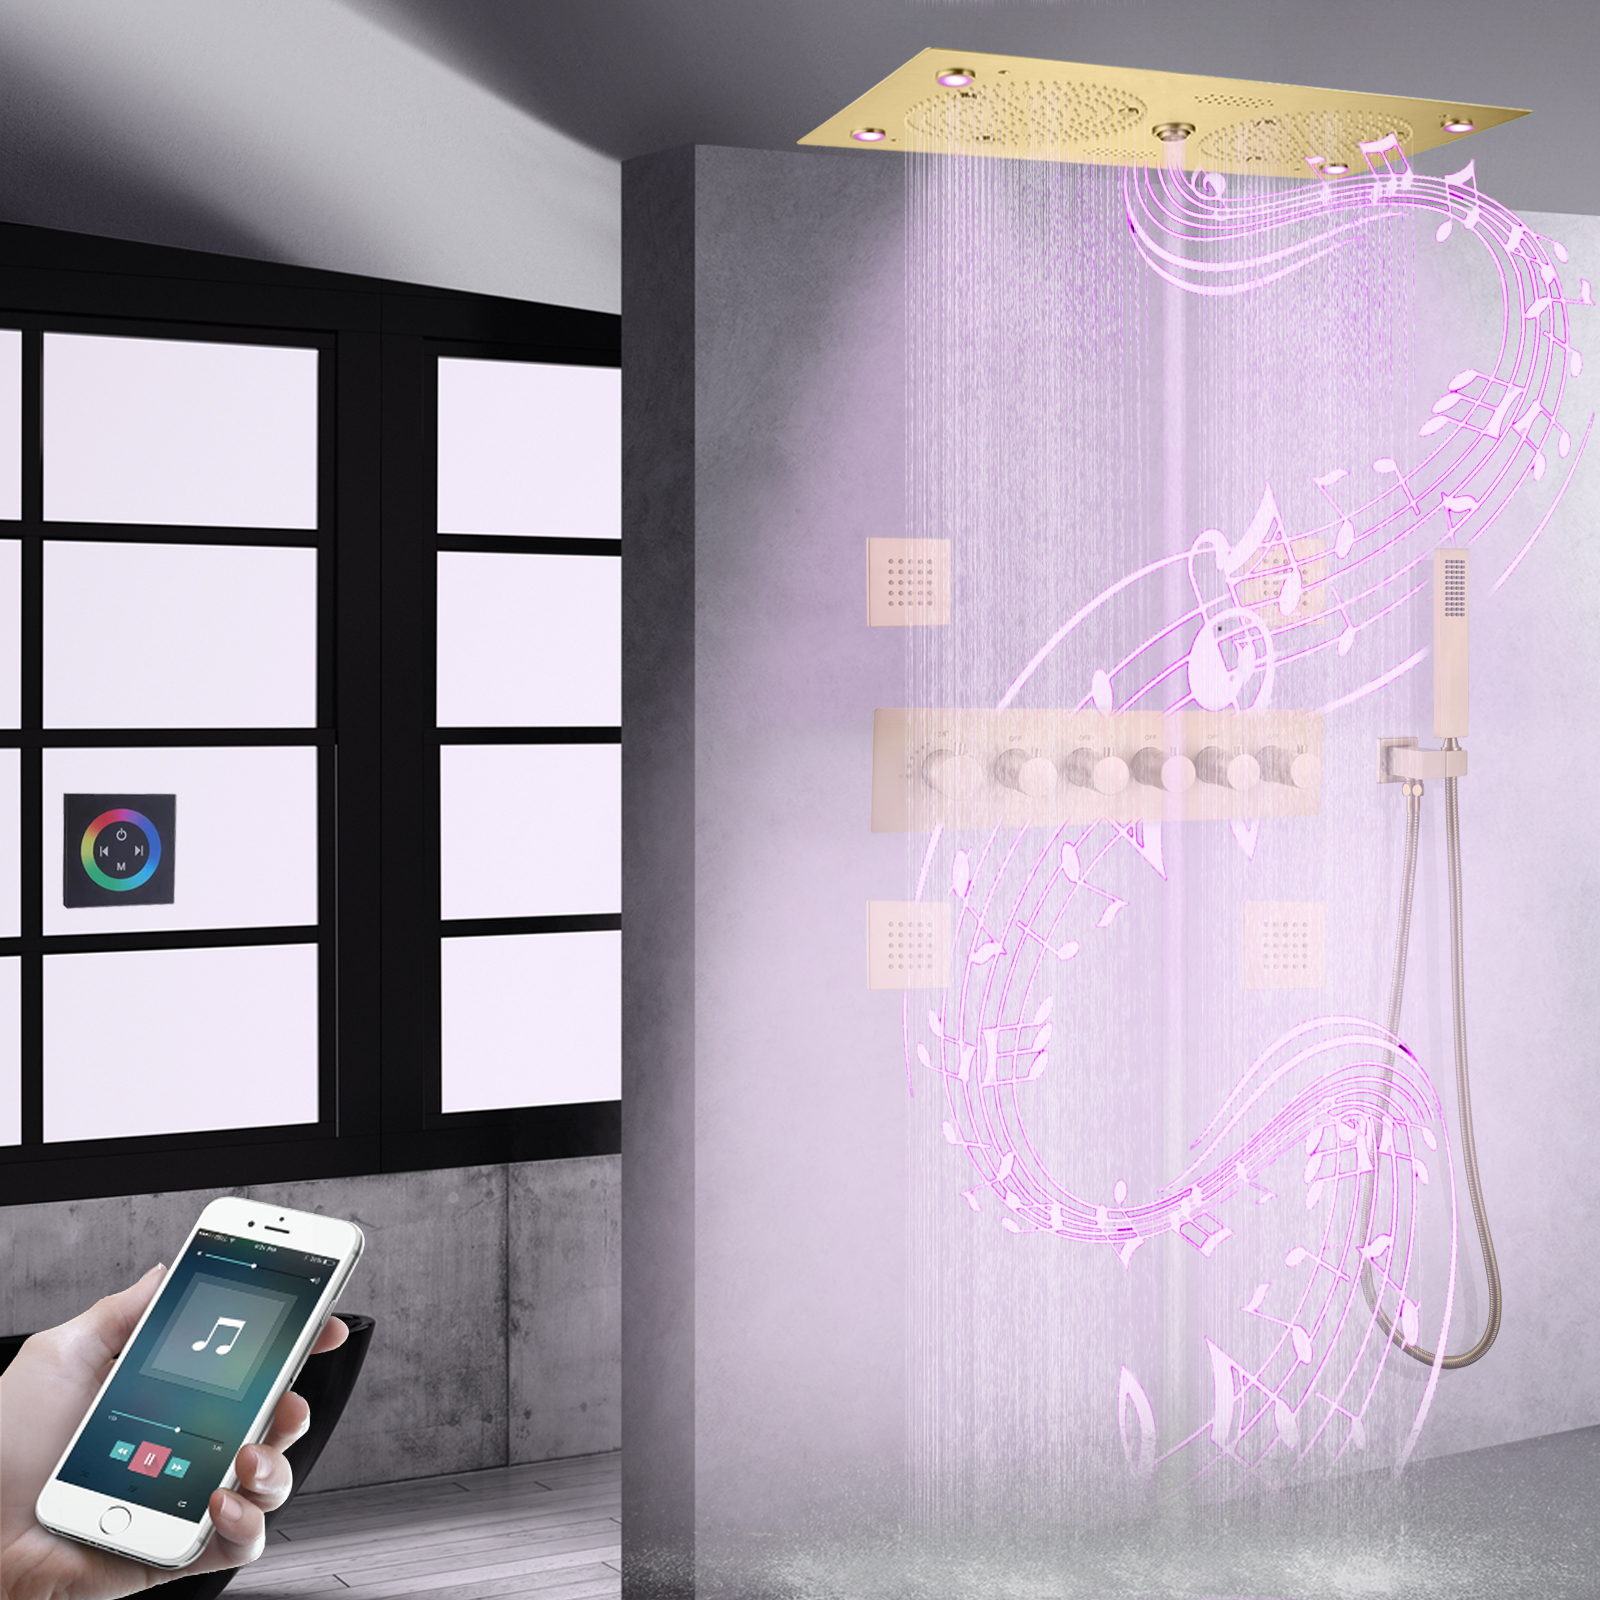 Brushed Gold LED Thermostatic Bathroom Bath Shower Faucet Music Rain Mist With Handheld Shower Set